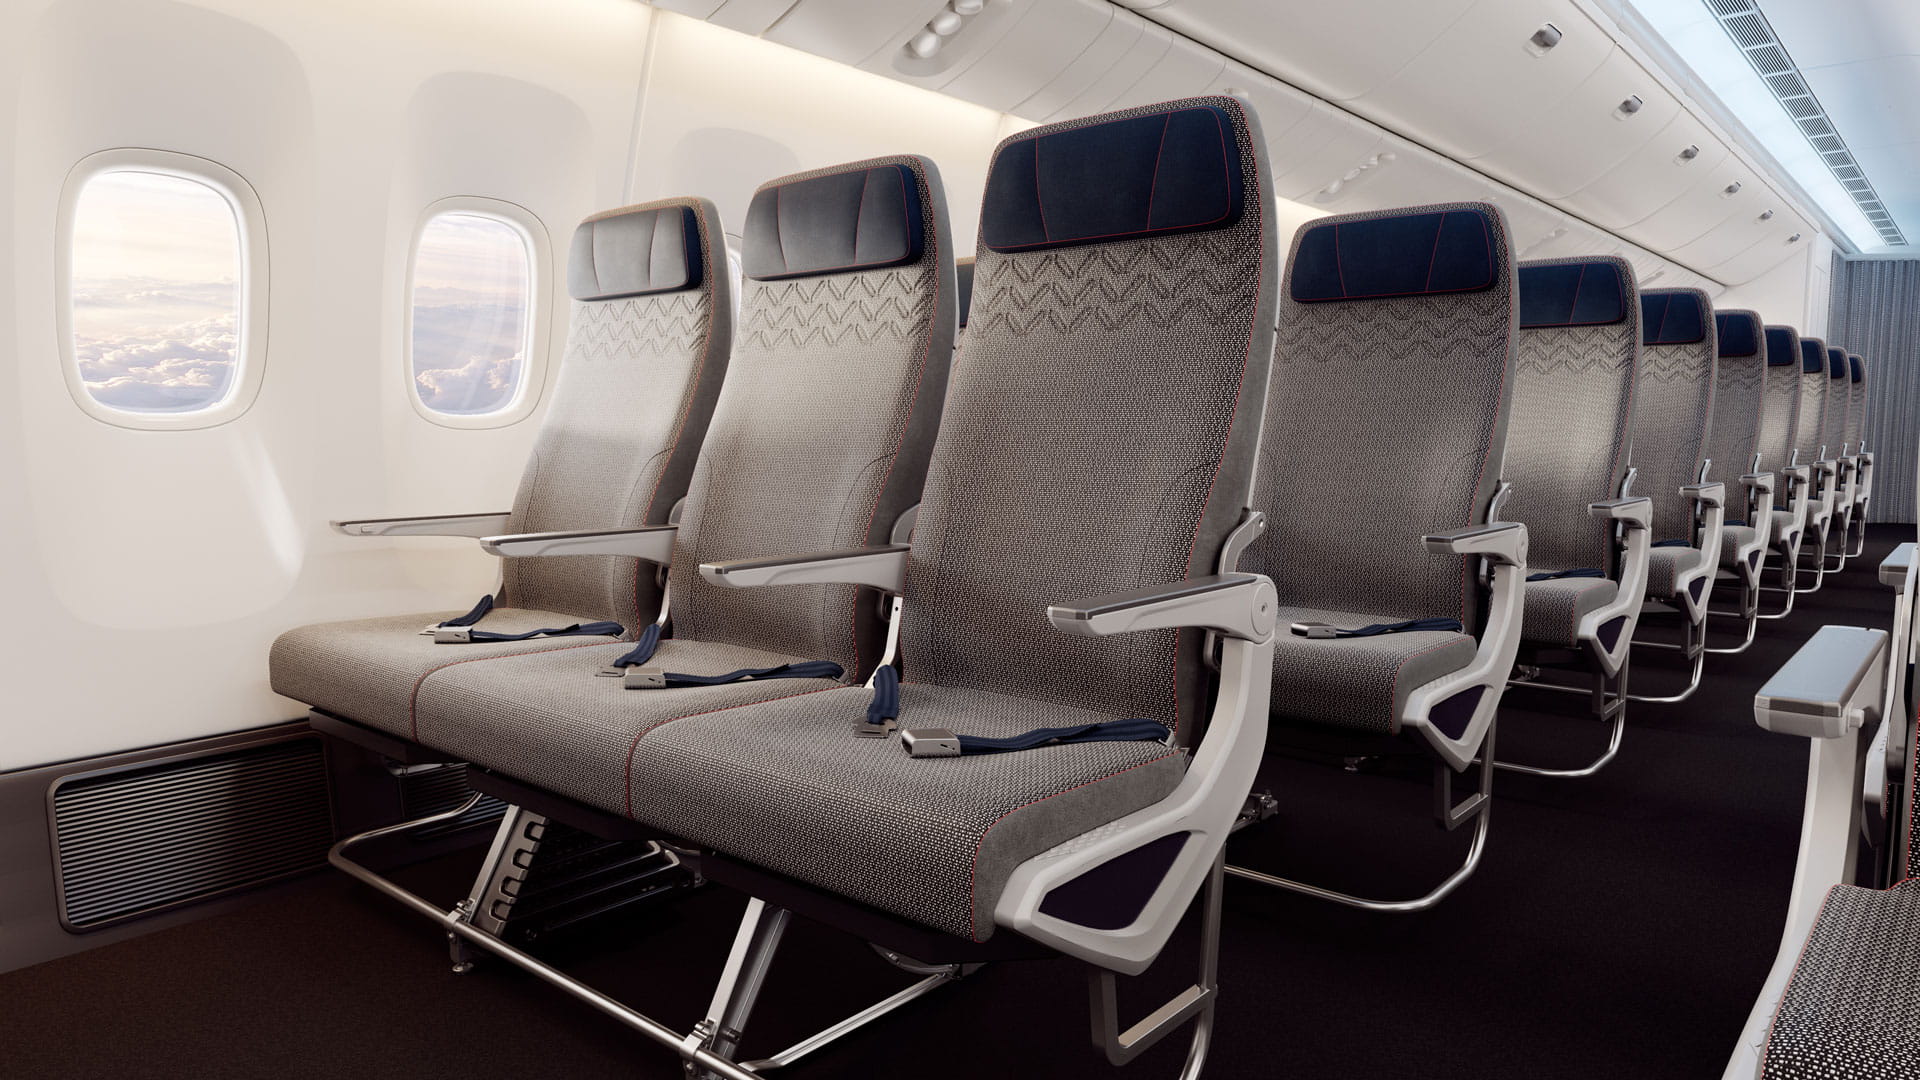 Airplane cabin seats